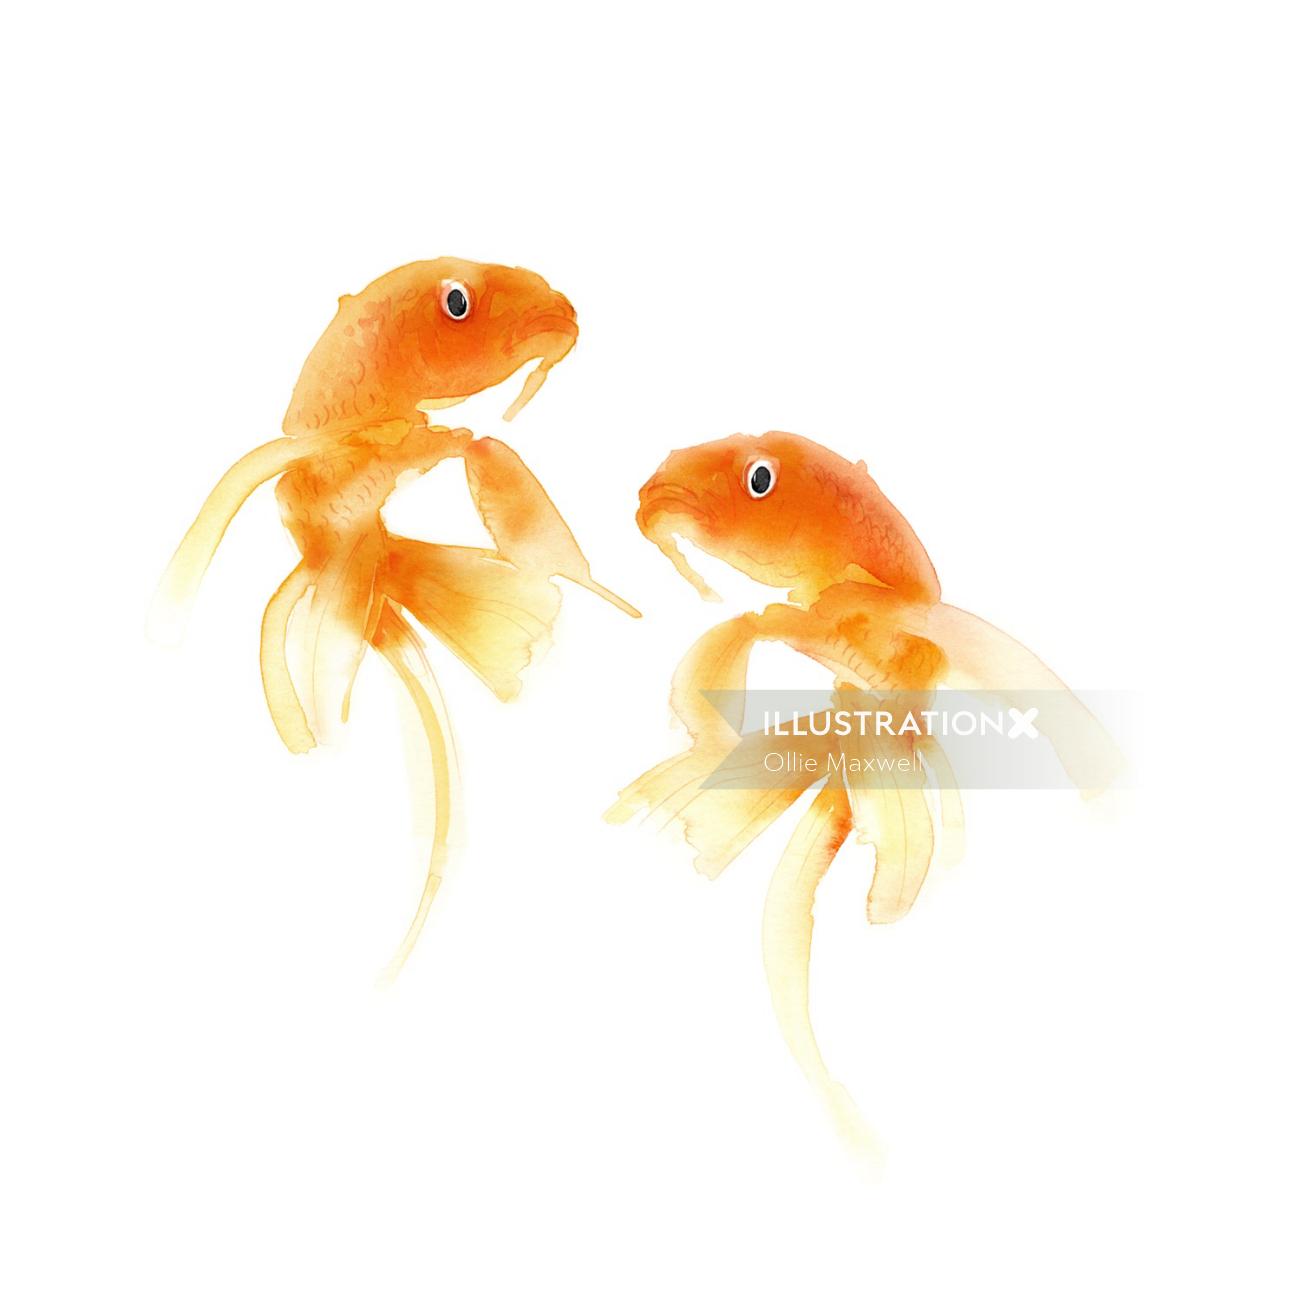 watercolour painting of Goldfish